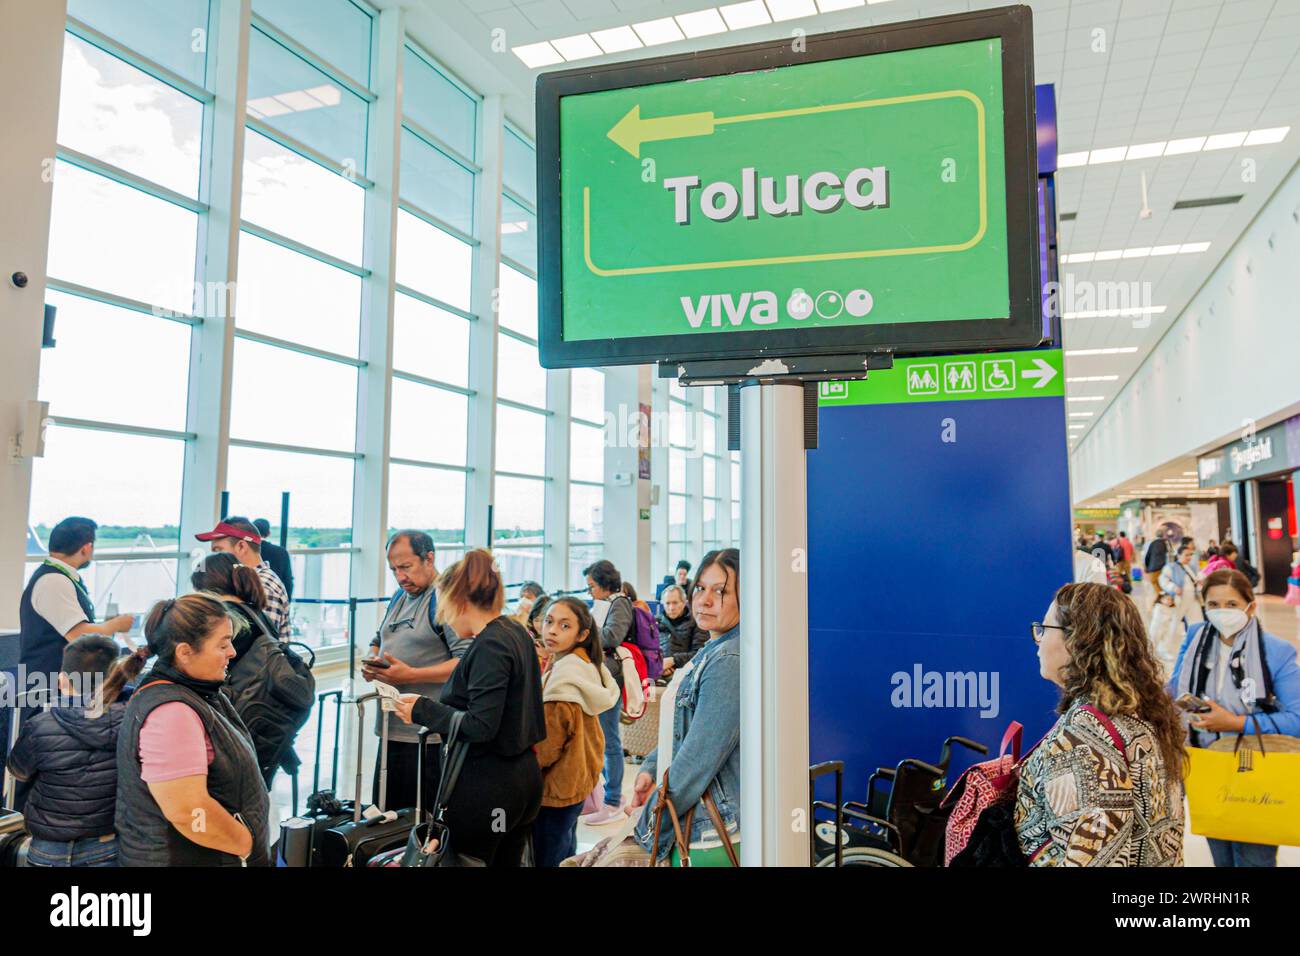 Merida Mexico, Manuel Crescencio Rejon internationaler Flughafen Merida, Innenraum, Gate-Bereich der Terminal-Halle, Hinweisschilder, Toluca Flug VI Stockfoto